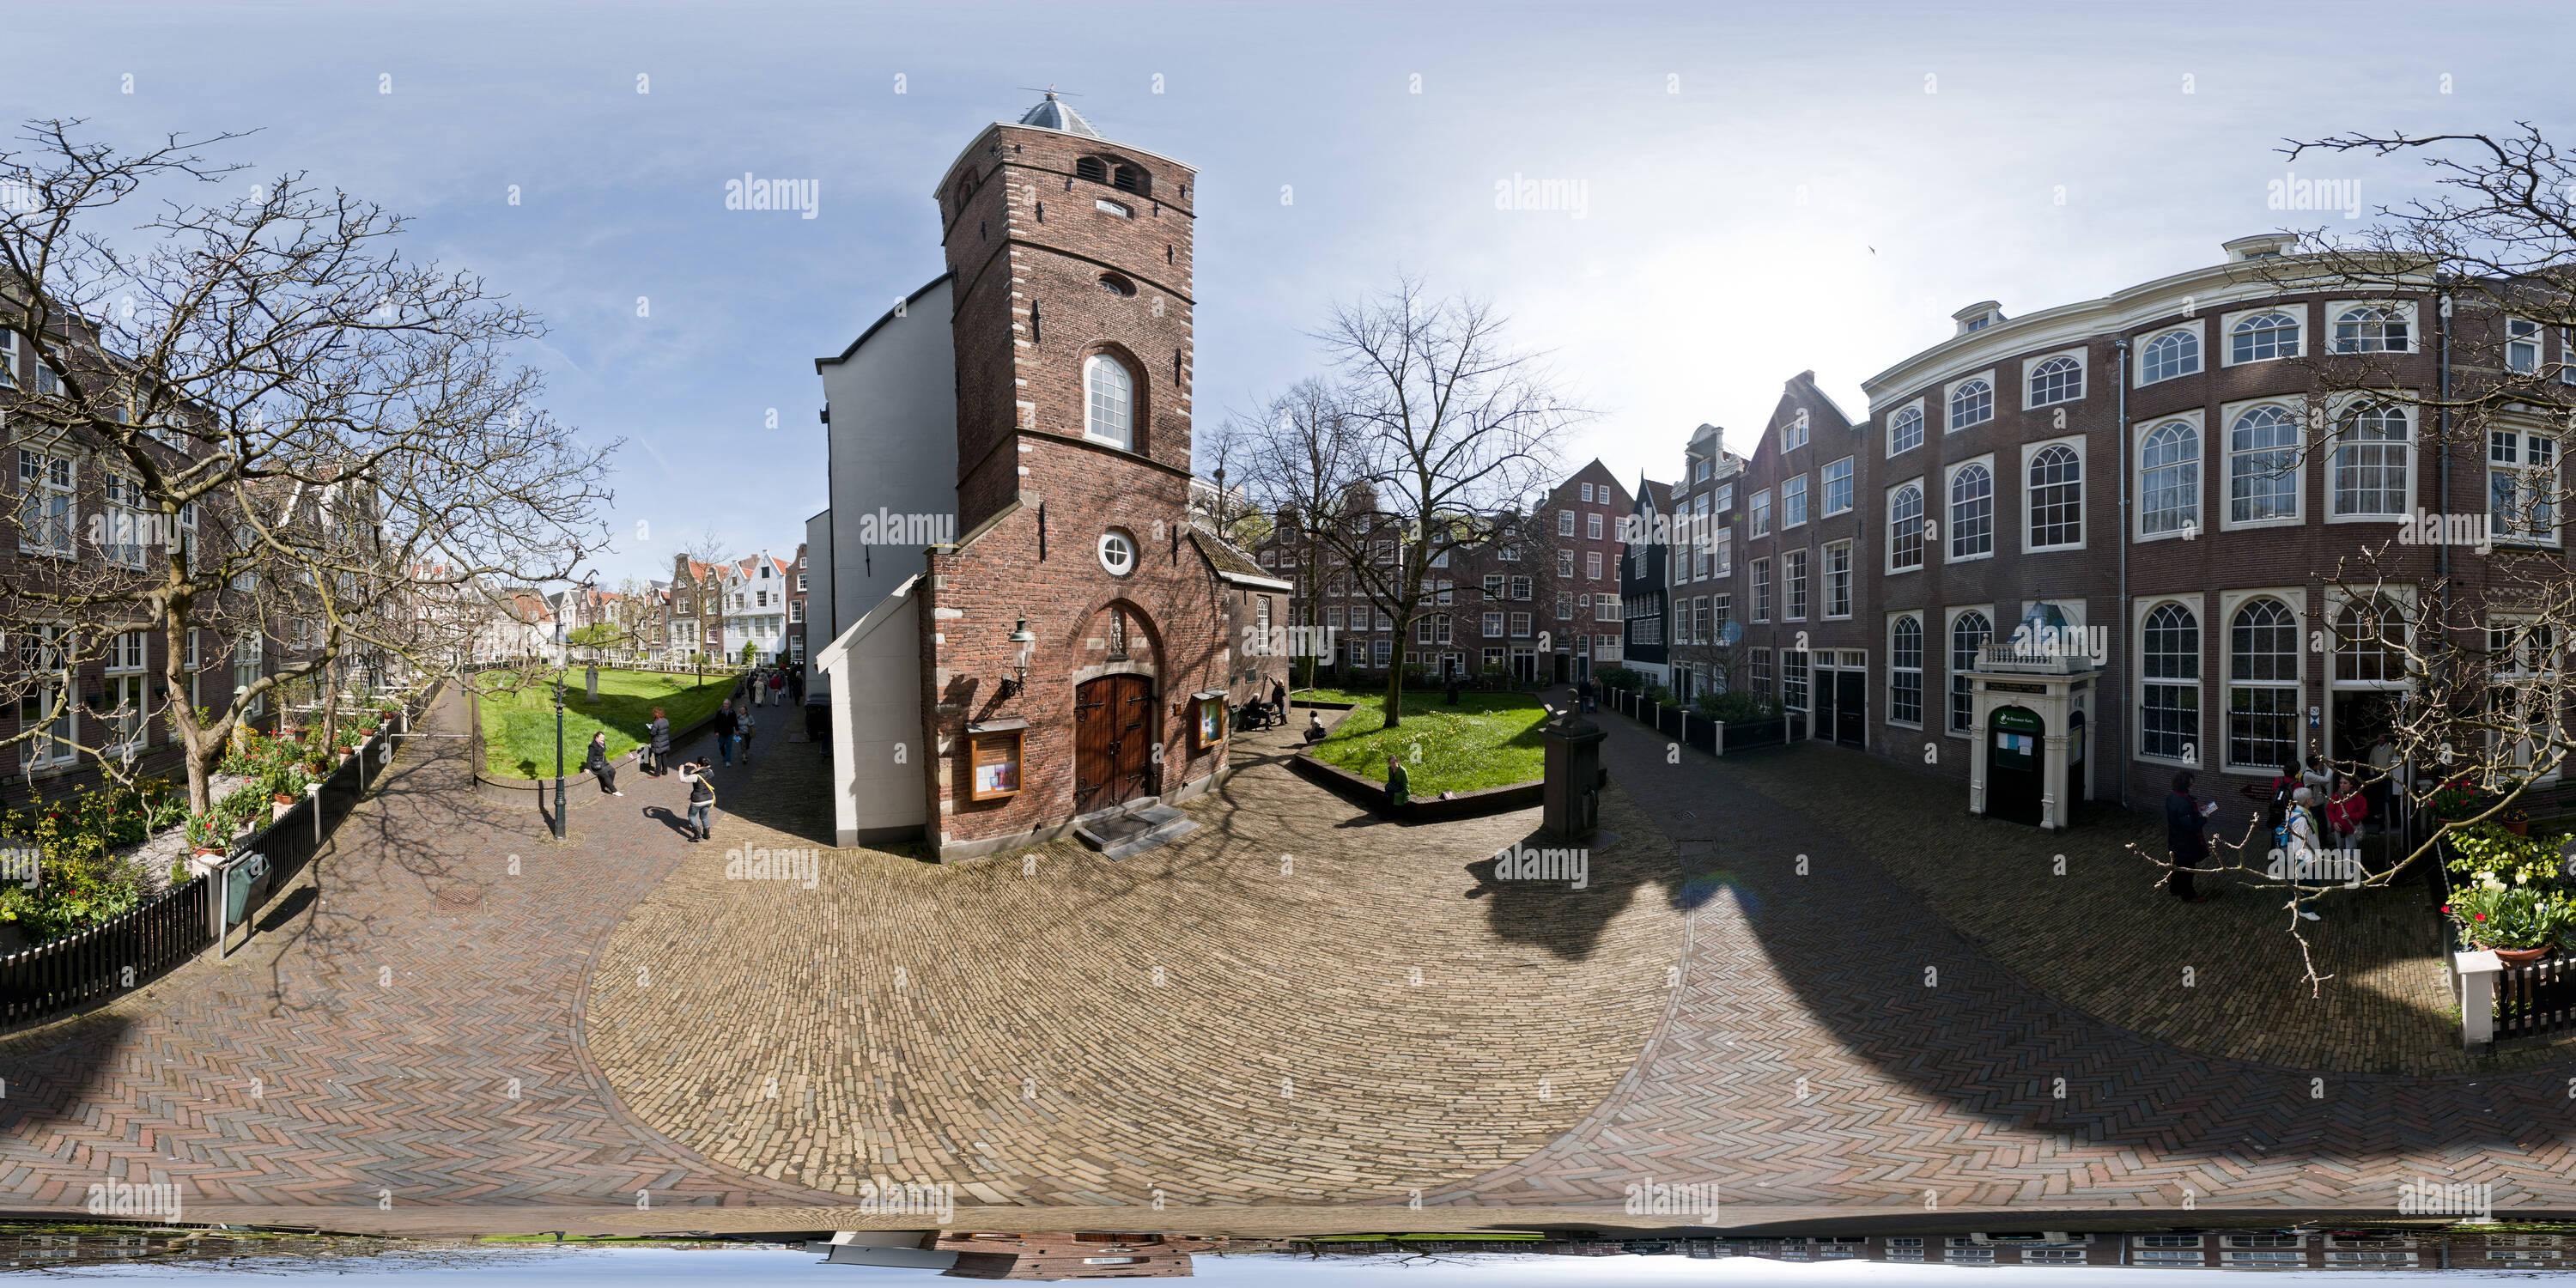 Visualizzazione panoramica a 360 gradi di Begijnhof Amsterdam dal di sopra.